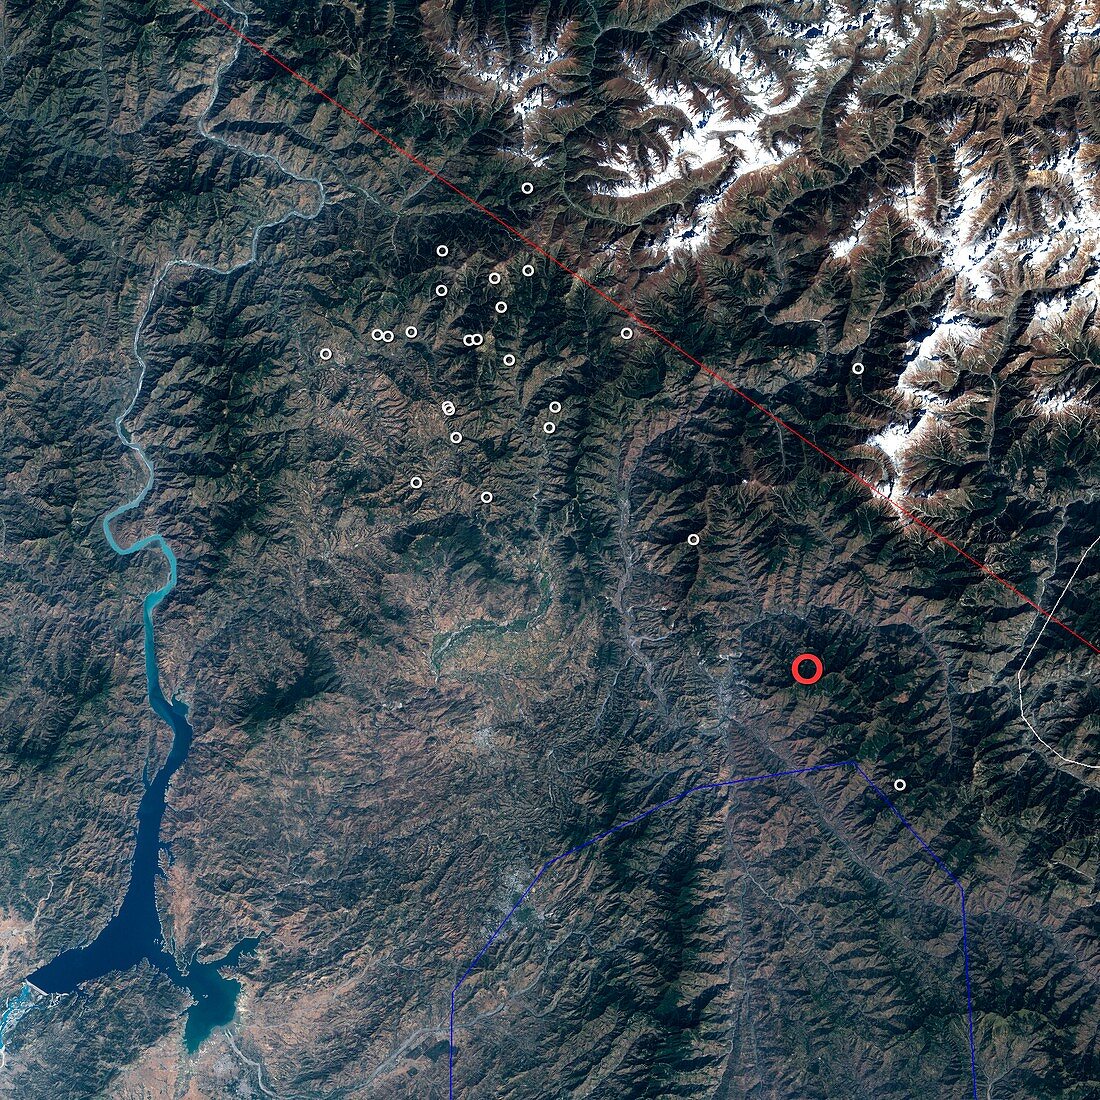 2005 Kashmir earthquake,satellite image